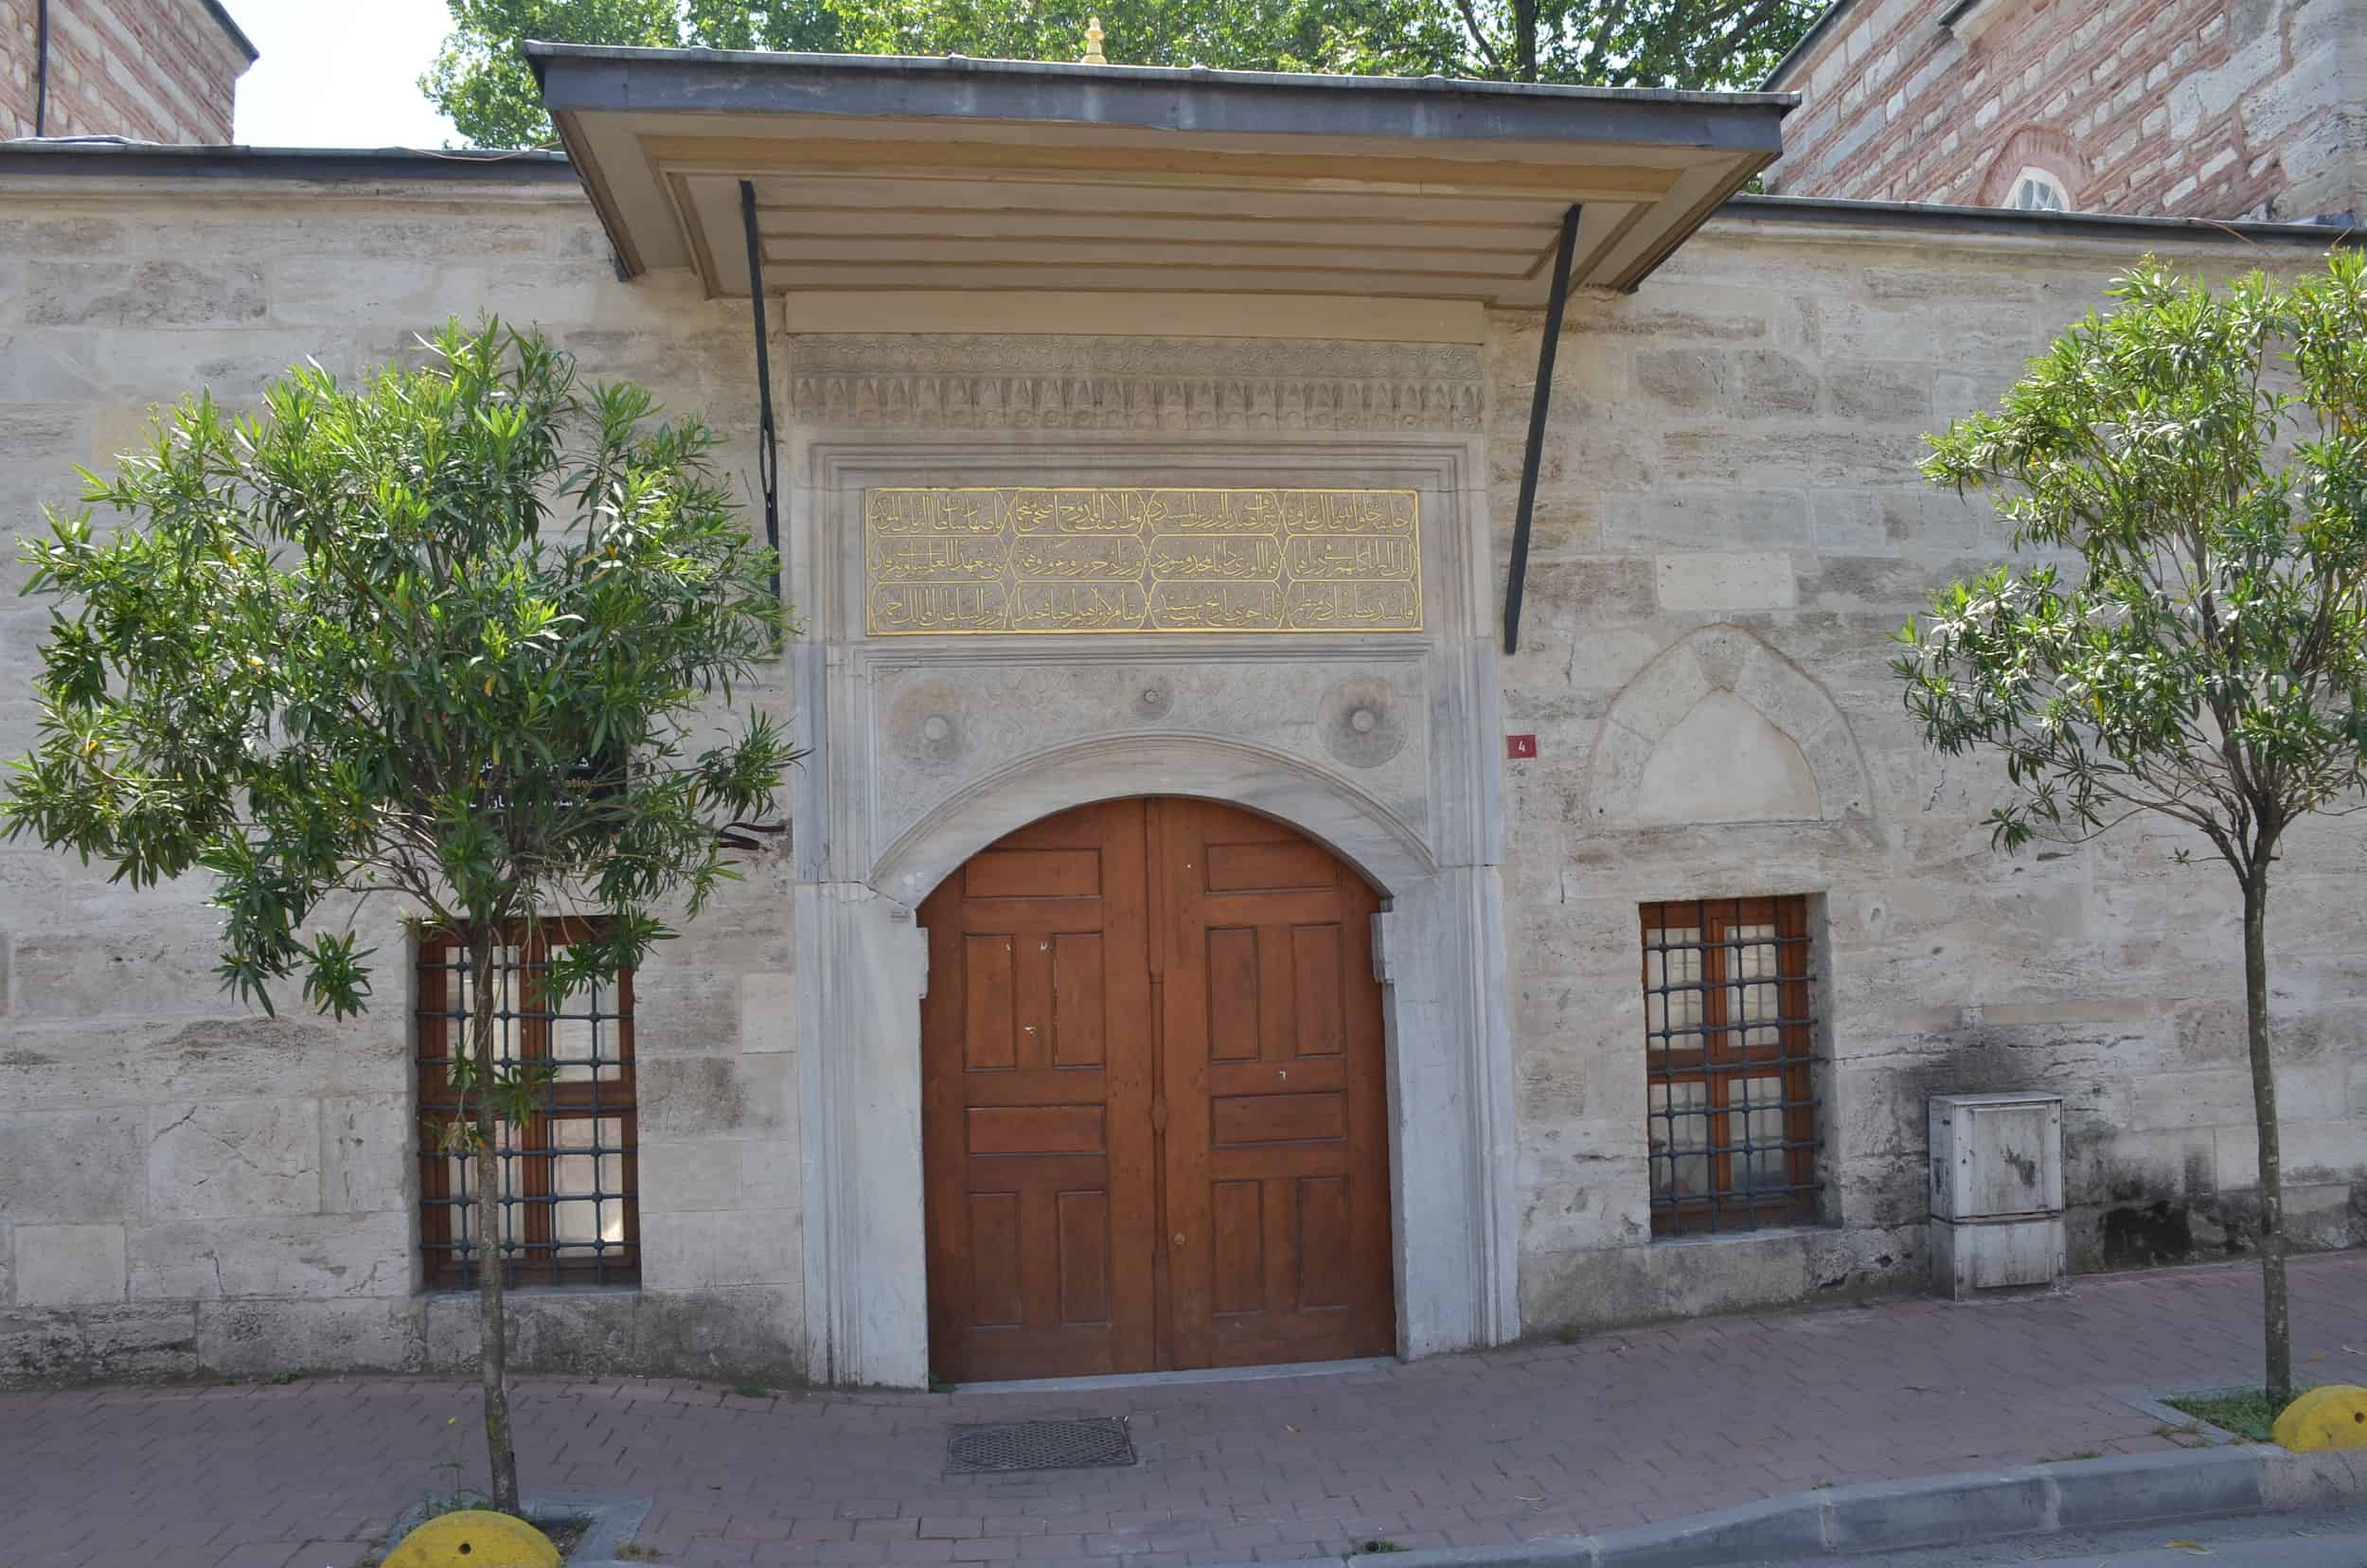 Entrance to the Damat Ibrahim Pasha Complex in Şehzadebaşı, Istanbul, Turkey